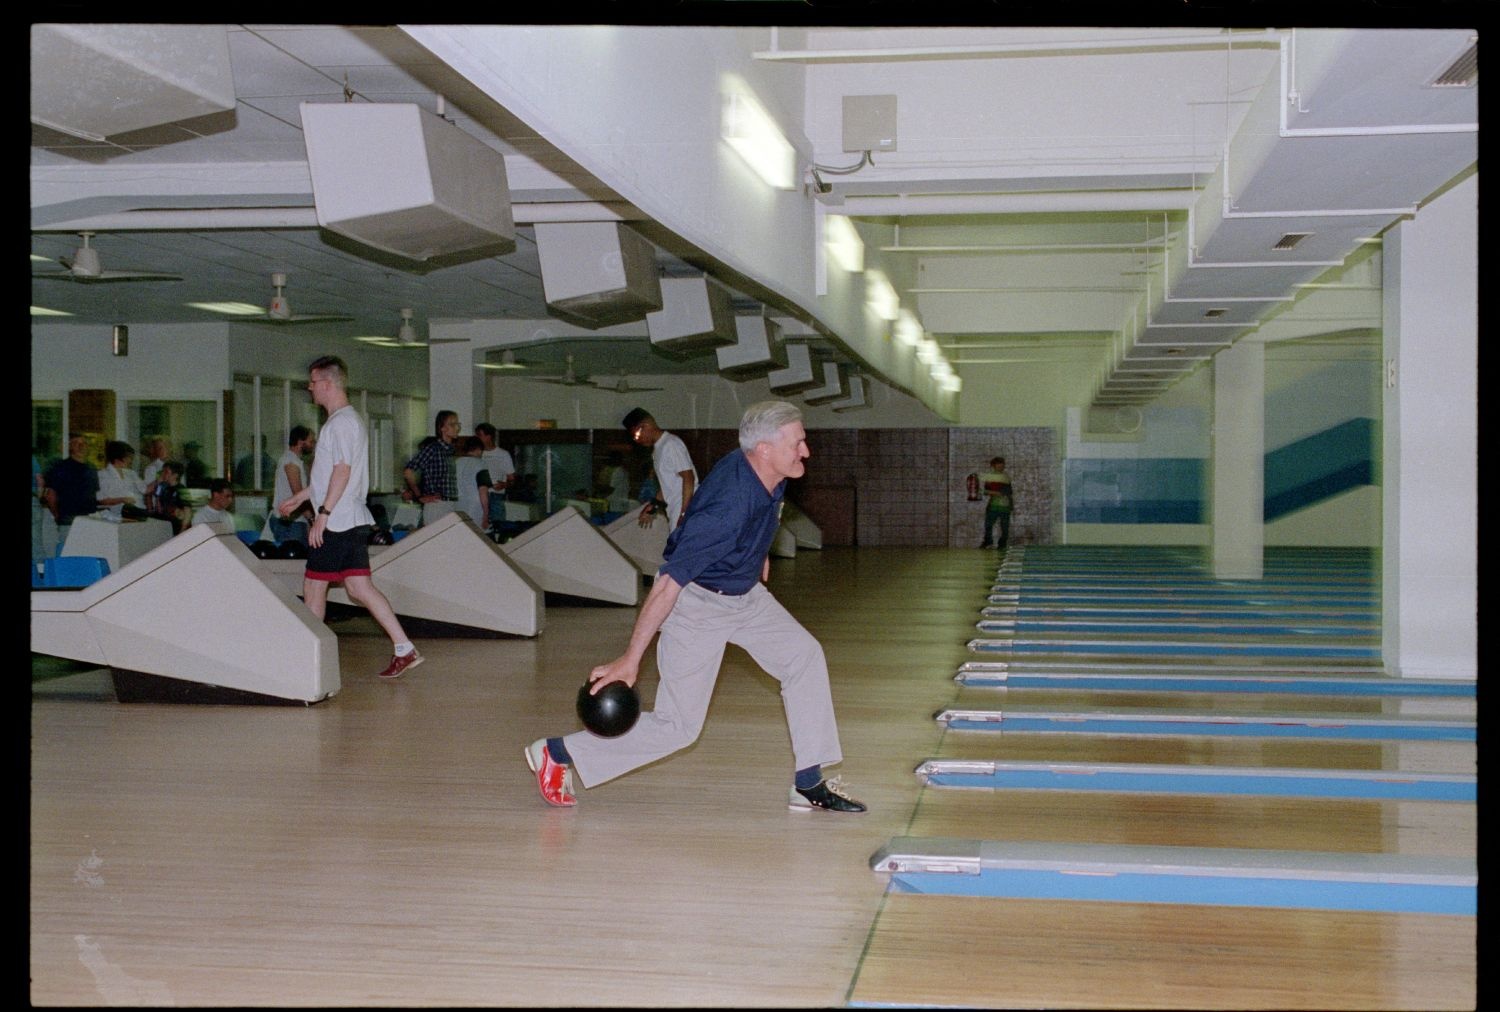 Fotografie: Bowling im Cole Sports Center der U.S. Army Berlin in Berlin-Dahlem